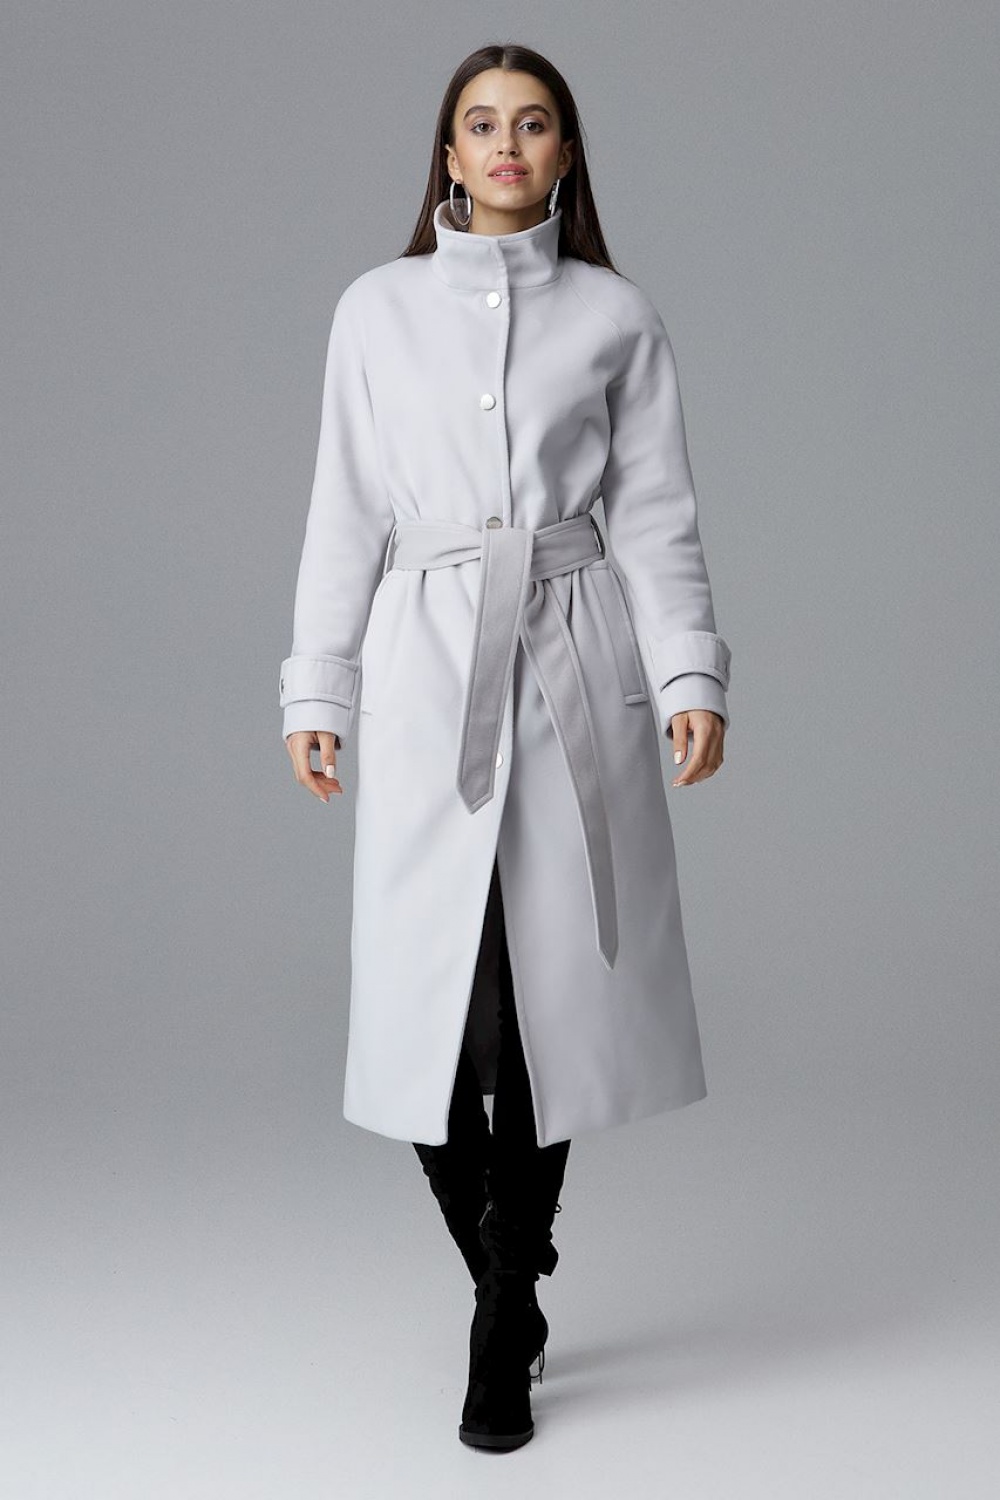 Coat model 124383 Figl grey Ladies